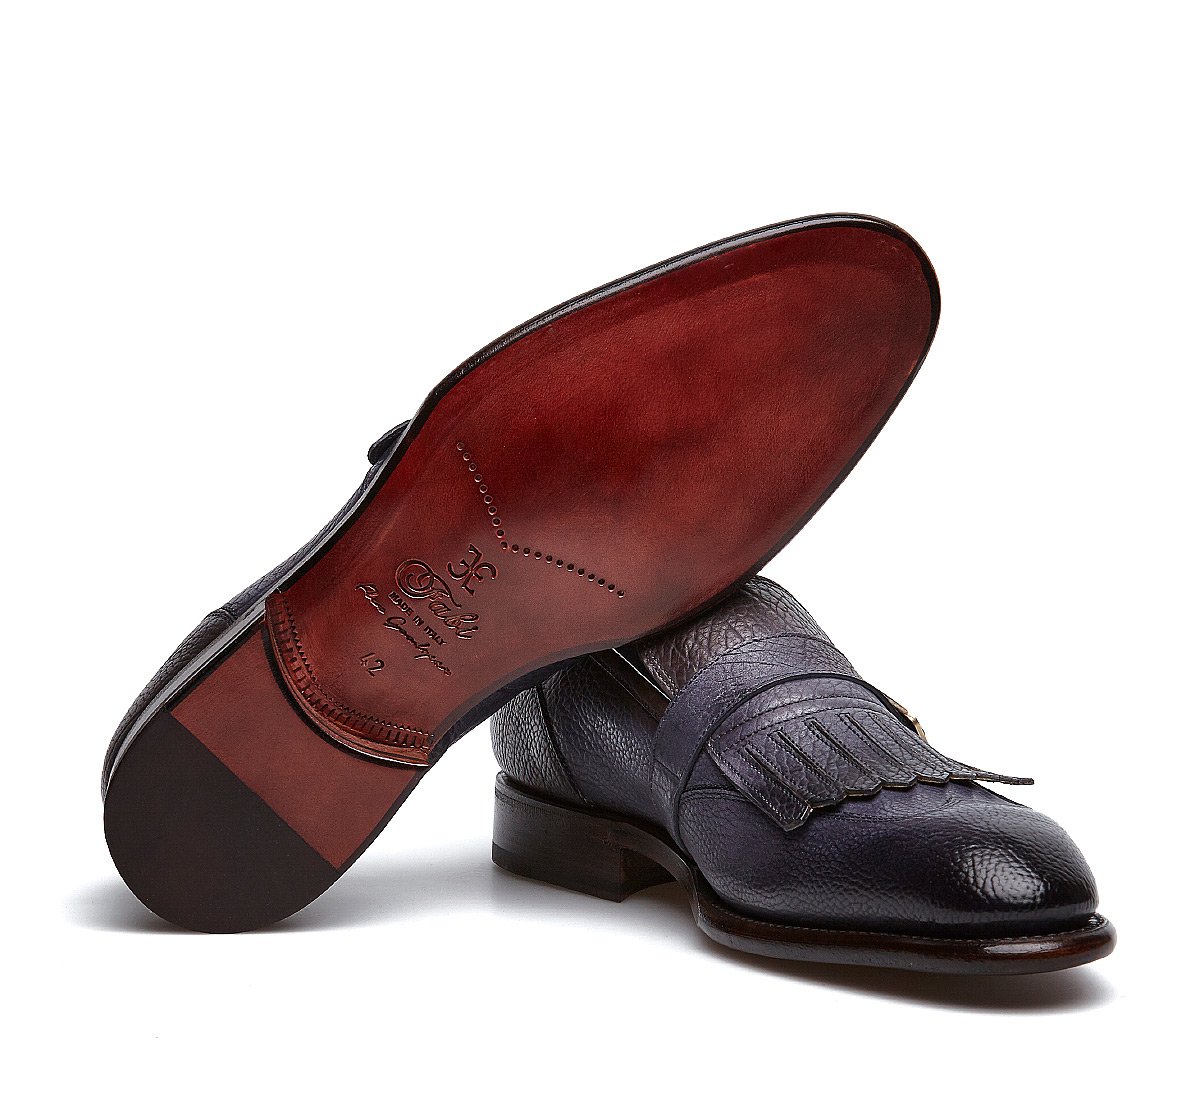 Fabi Flex Goodyear monk-strap shoes in exquisite hand-aged calfskin